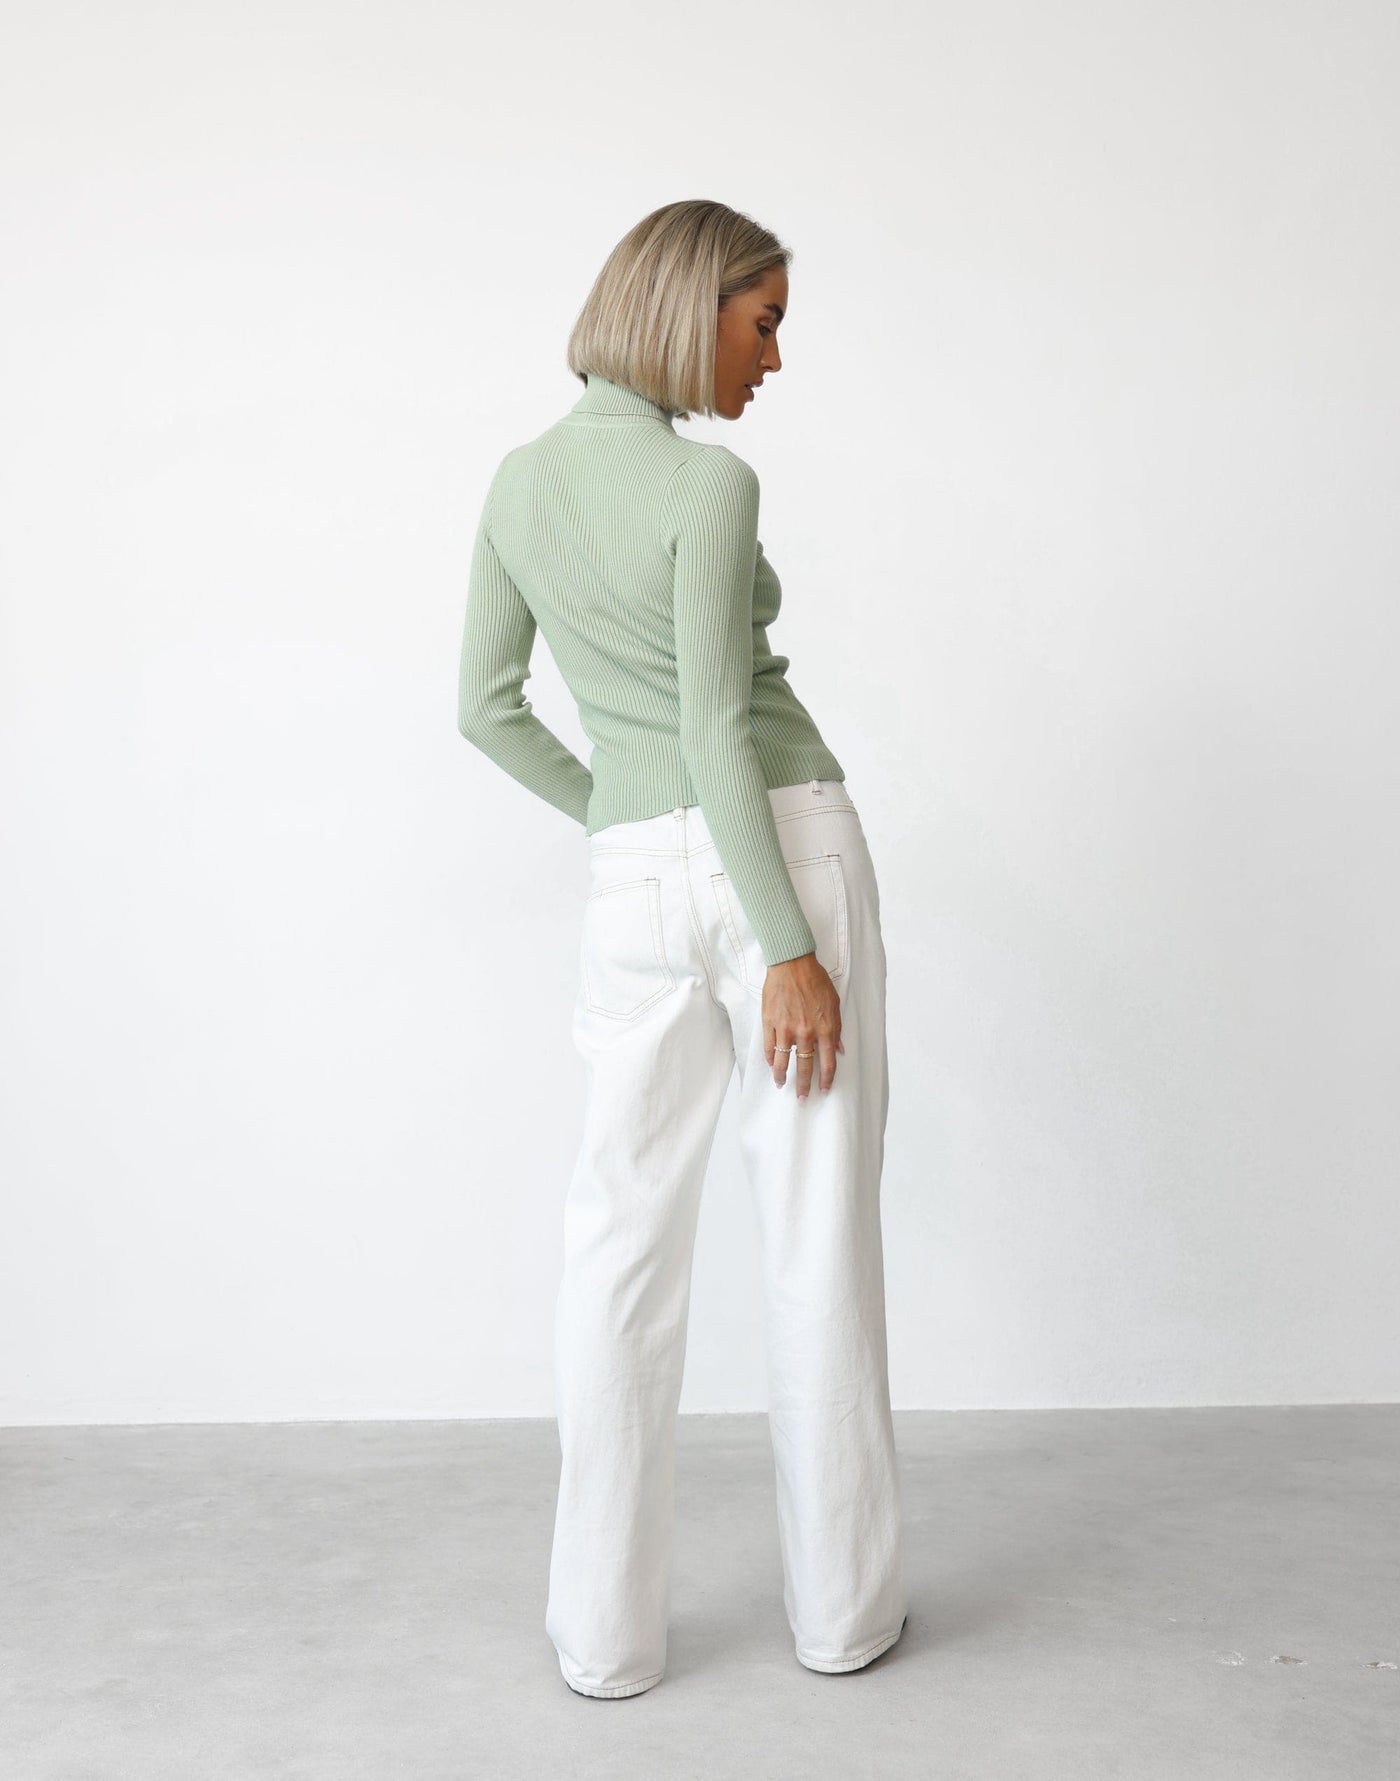 Davison Long Sleeve Top (Sage) - Turtleneck Long Sleeve Knit Top - Women's Top - Charcoal Clothing